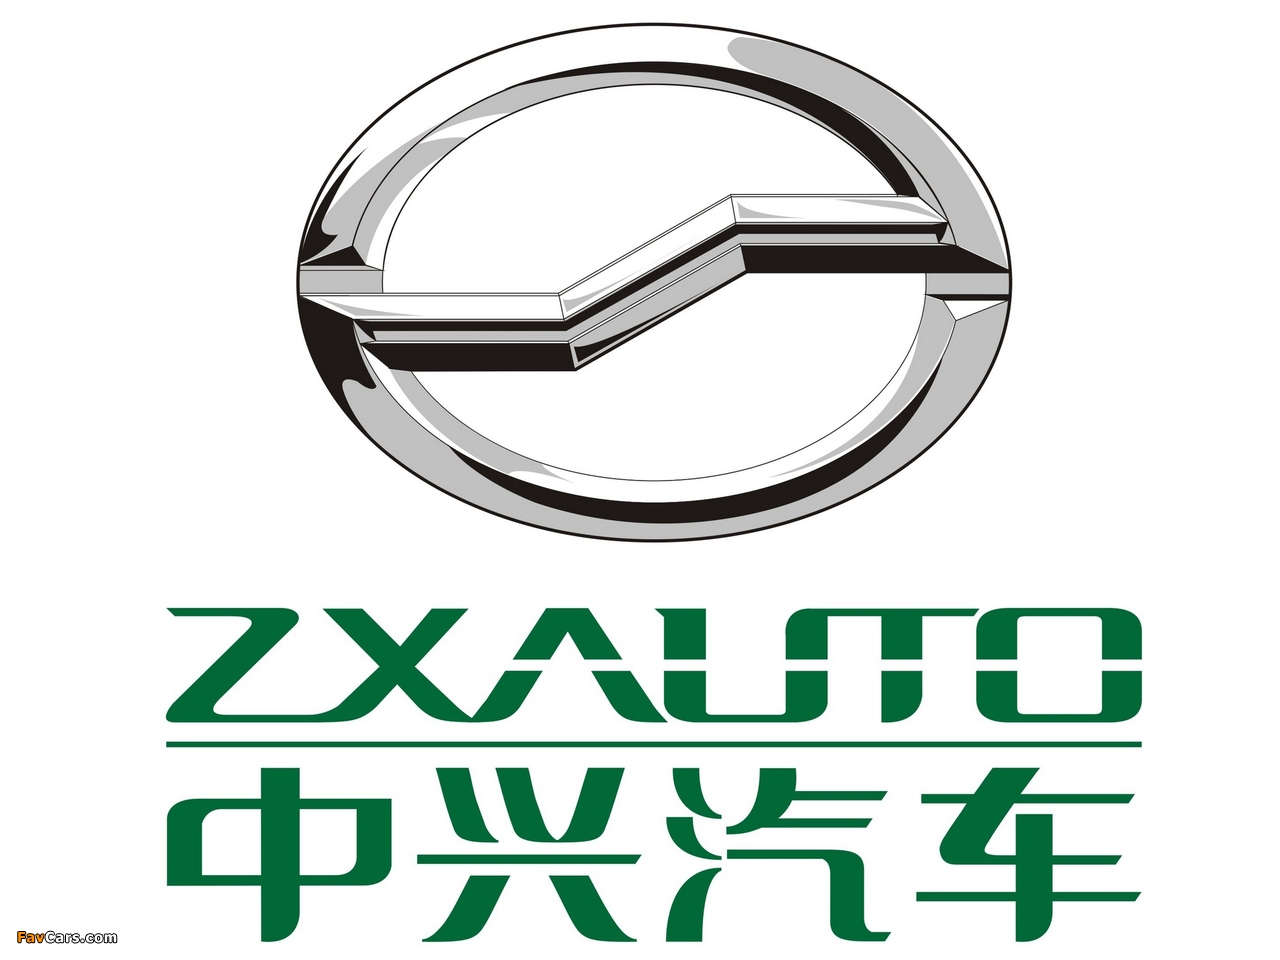 ZXAuto images (1280 x 960)